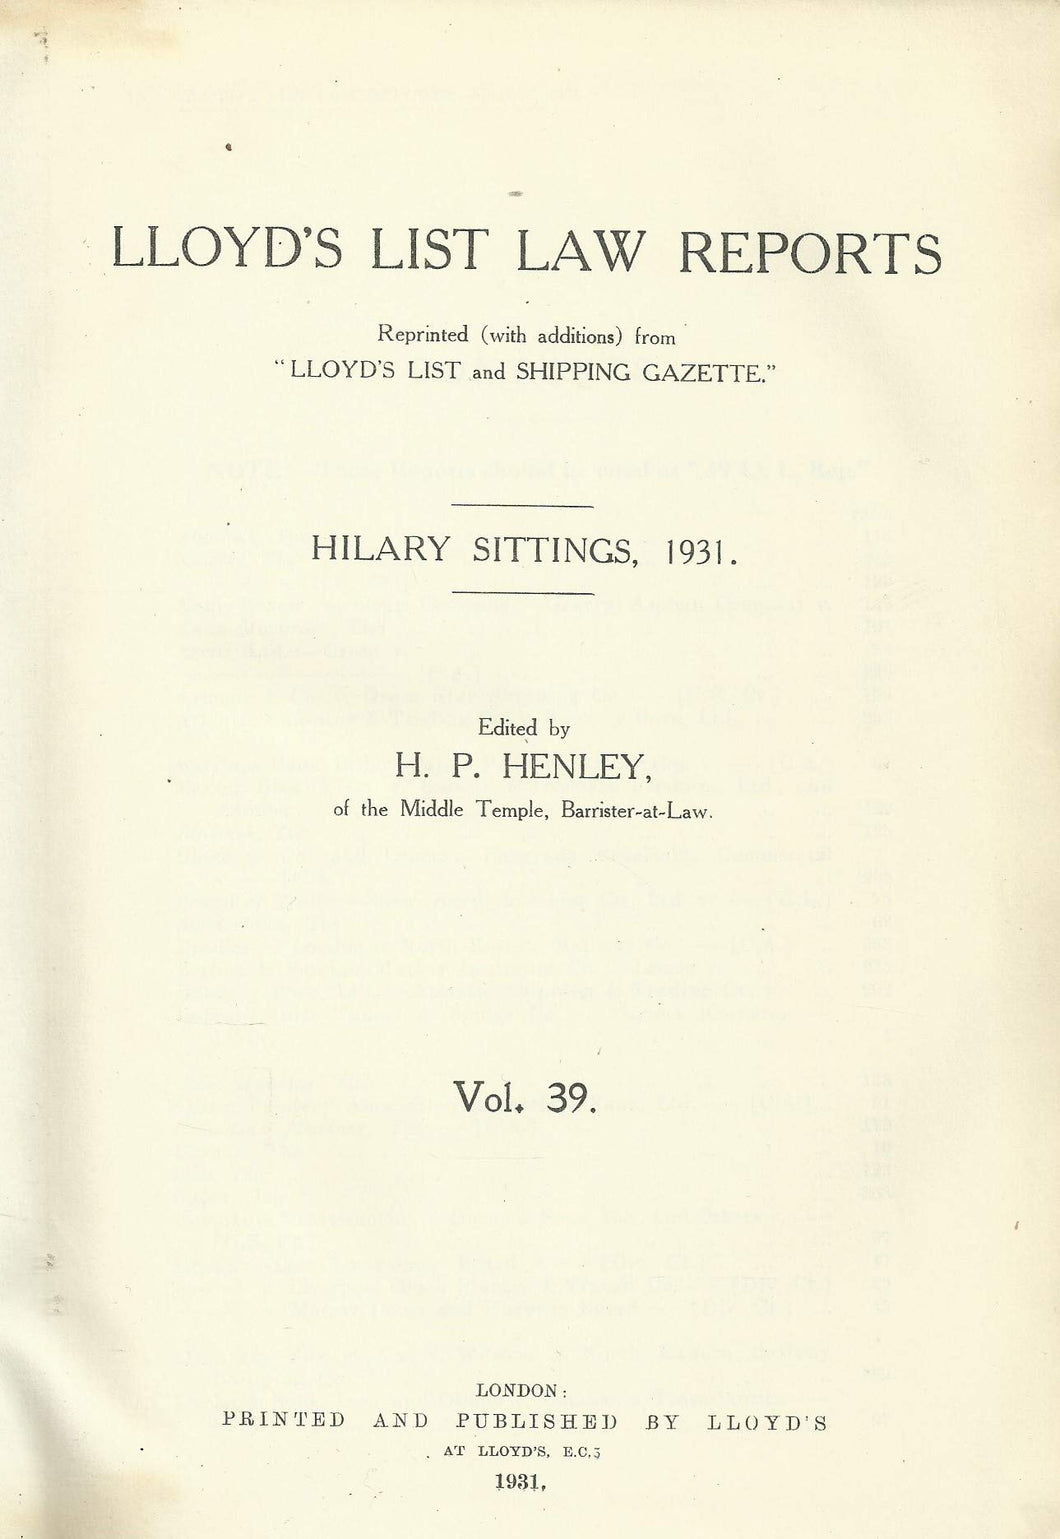 Lloyd's List Law Reports - Volume 39, Hilary Sittings, 1931